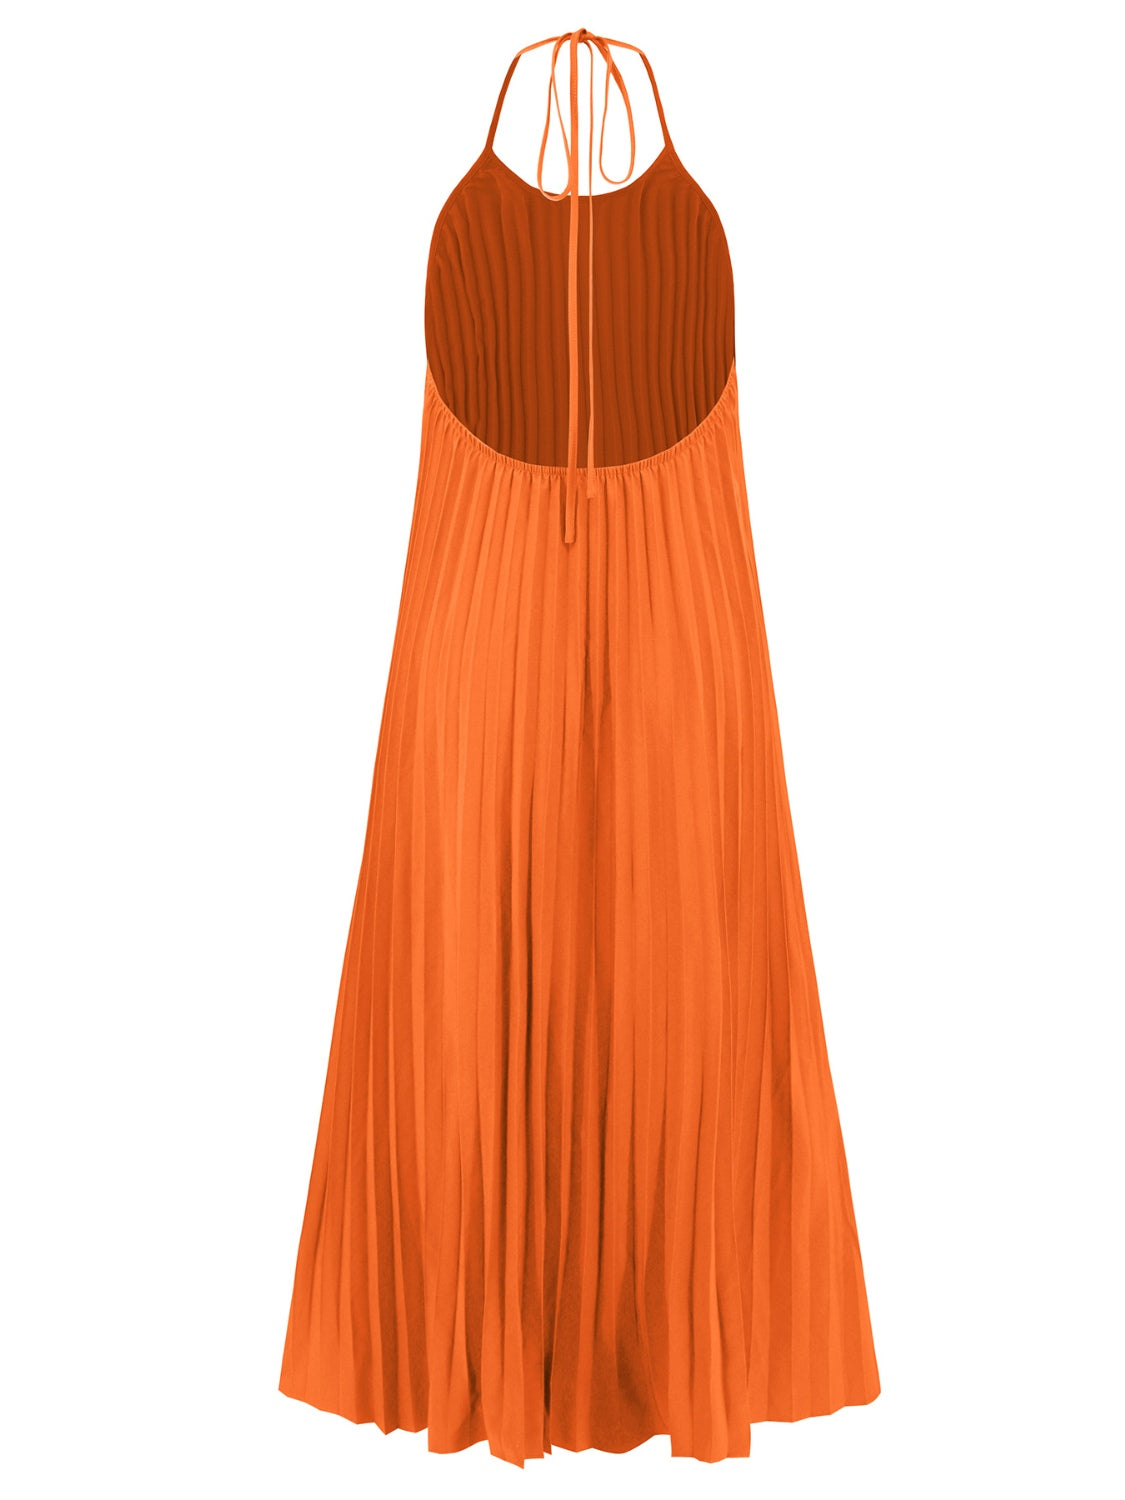 Pleated Halter Neck Sleeveless Dress (6 colors)